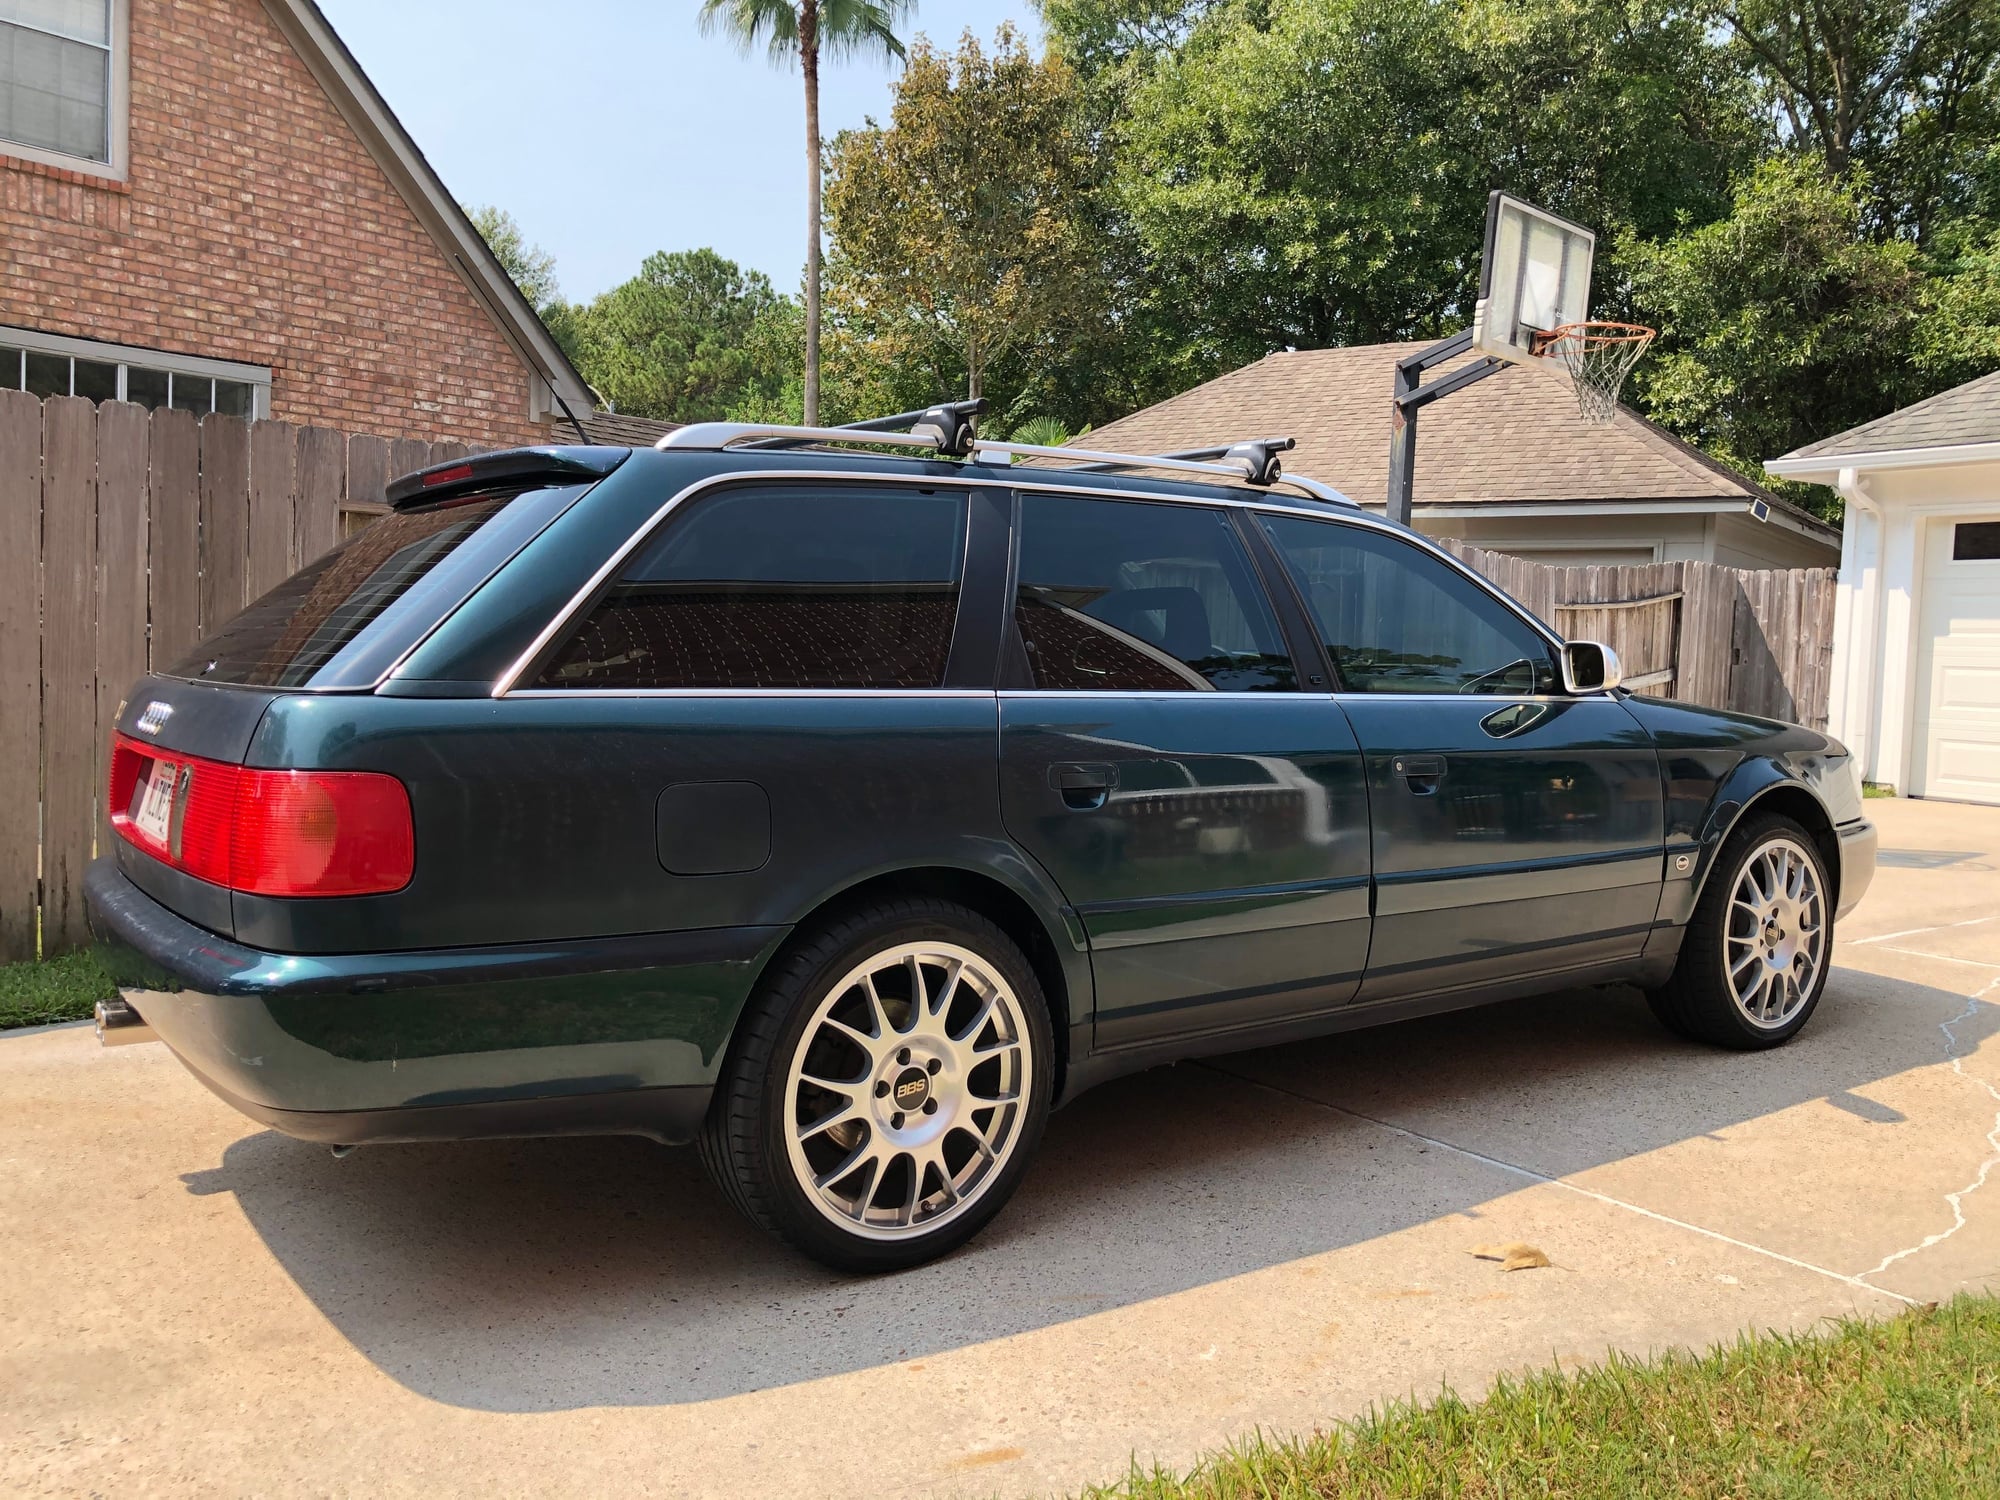 1995 Audi S6 - 1995 Audi URS6 Avant Green/Ecru Houston TX - Used - VIN WAULA84A7SN111014 - 209,123 Miles - 5 cyl - AWD - Manual - Wagon - Other - Houston, TX 77345, United States